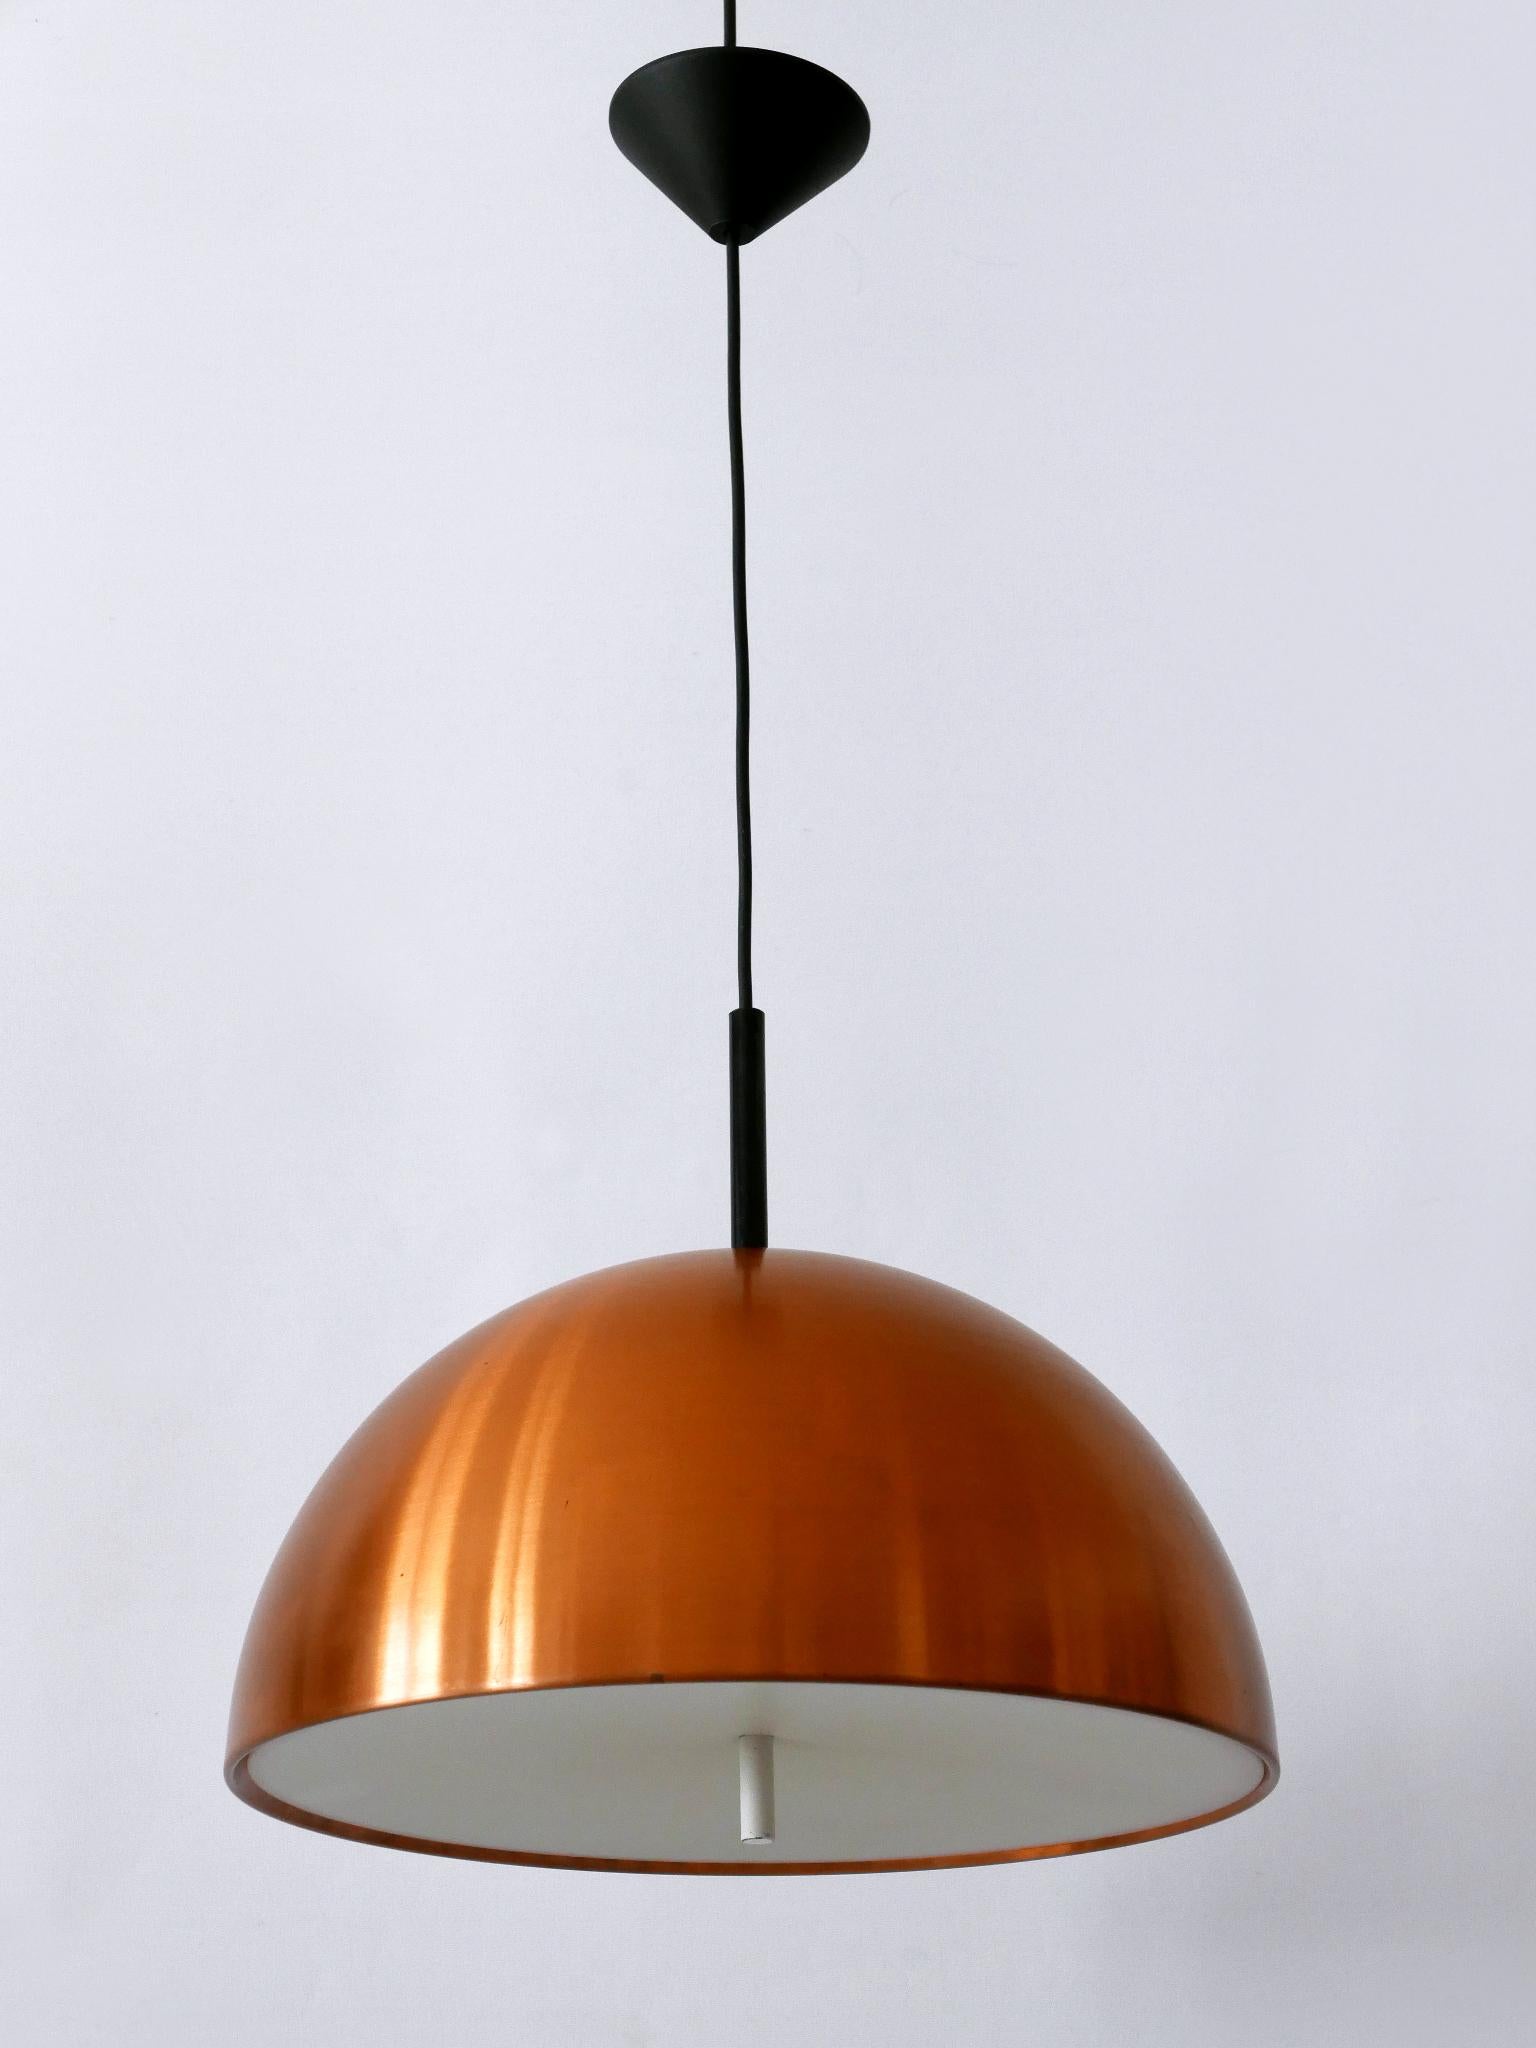 Elegant Mid-Century Modern Copper Pendant Lamp by Staff & Schwarz Germany 1960s In Good Condition For Sale In Munich, DE